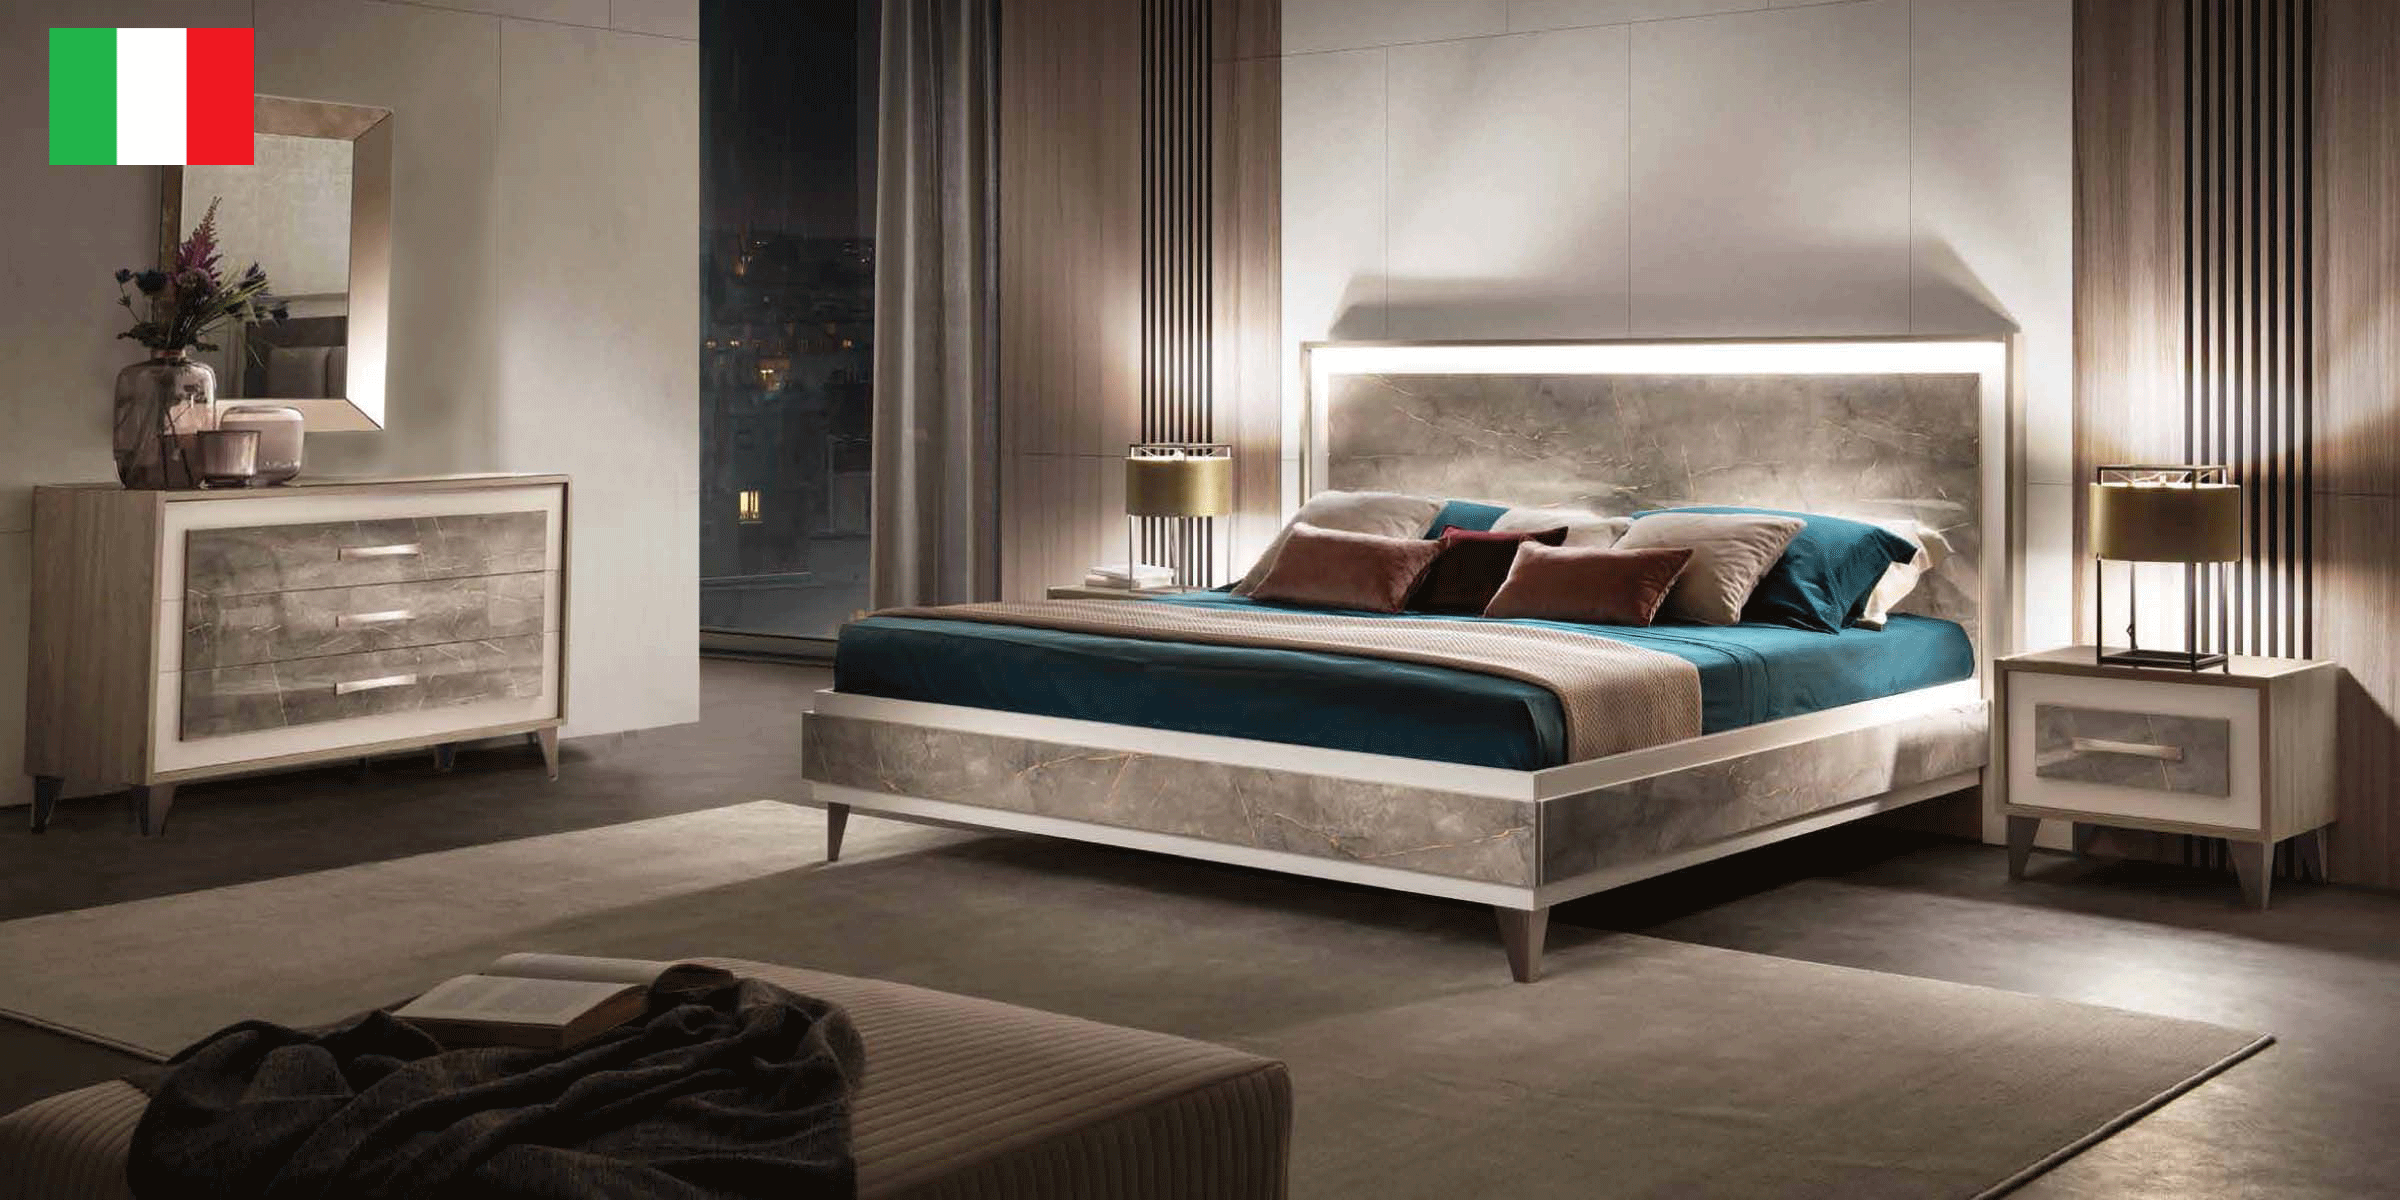 Bedroom Furniture Mirrors ArredoAmbra Bedroom by Arredoclassic with single dresser